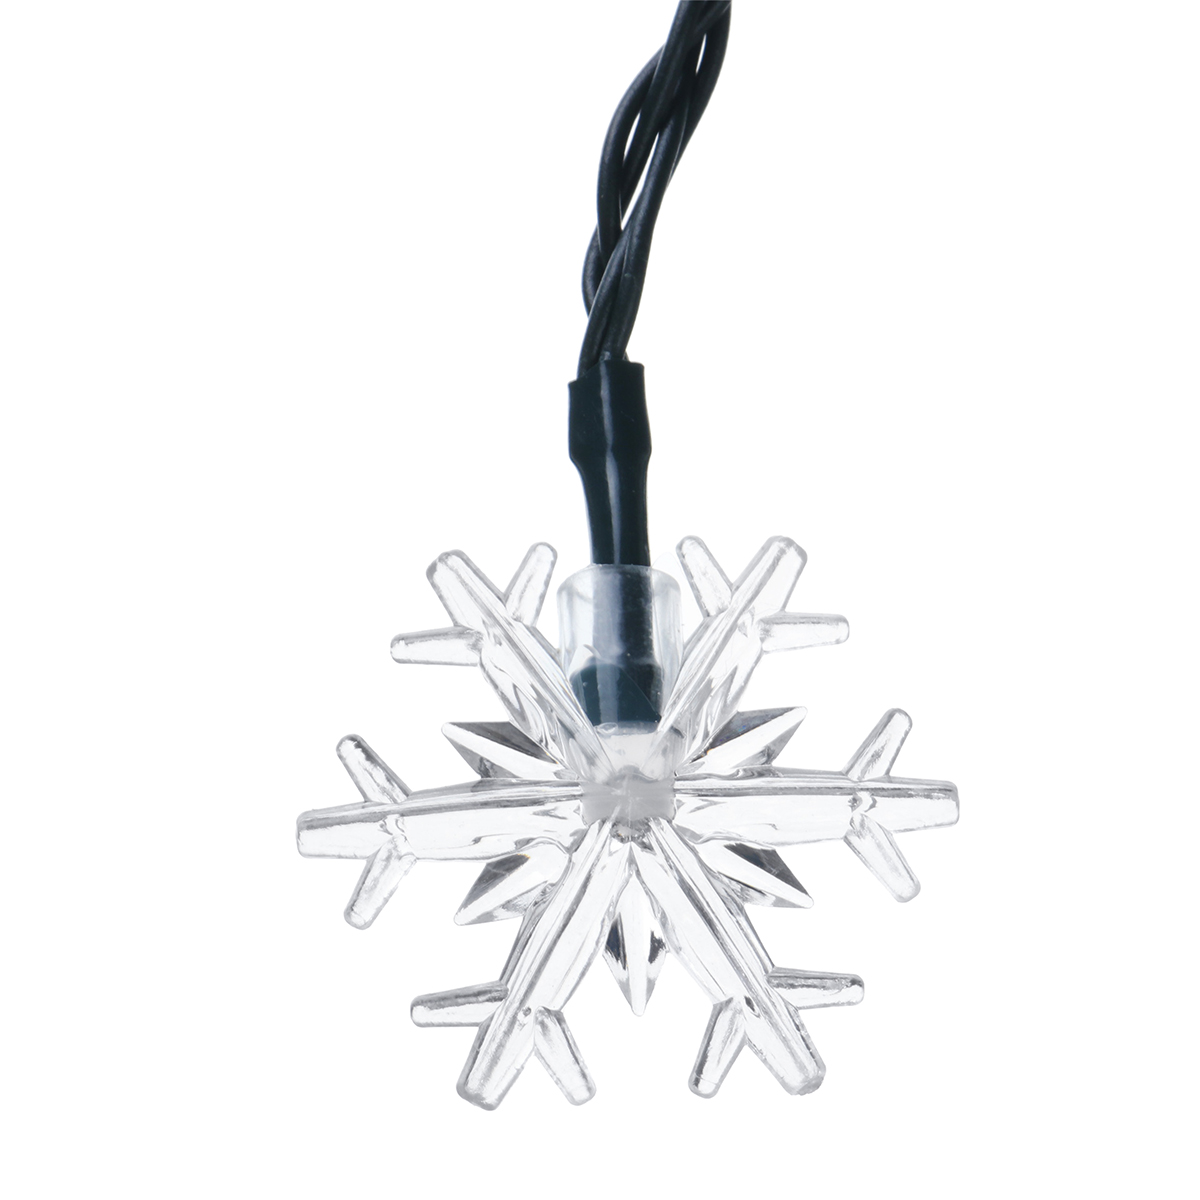 5/6.5/9.5/10M Solar Powered Snowflake String Fairy Lights Xmas Garden Outdoor Party Decor Lamp